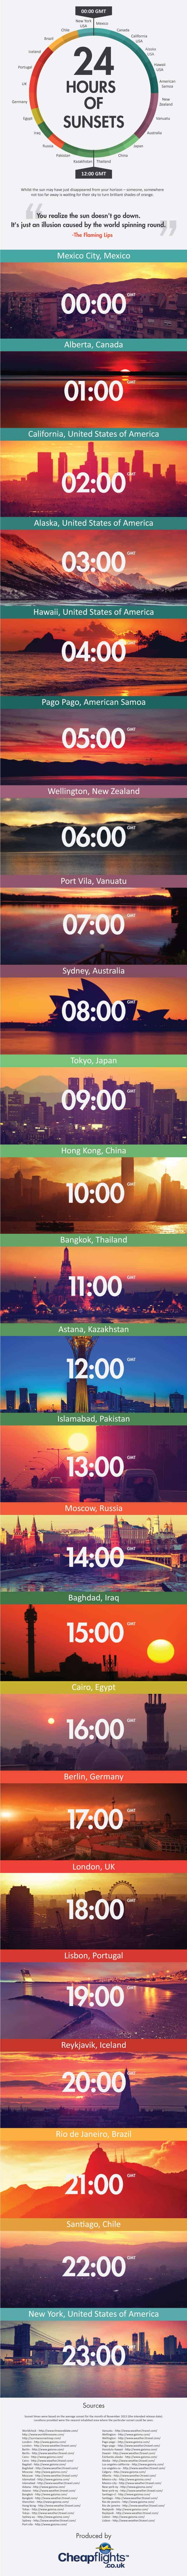 Infographic Foto Sunset Di Dunia